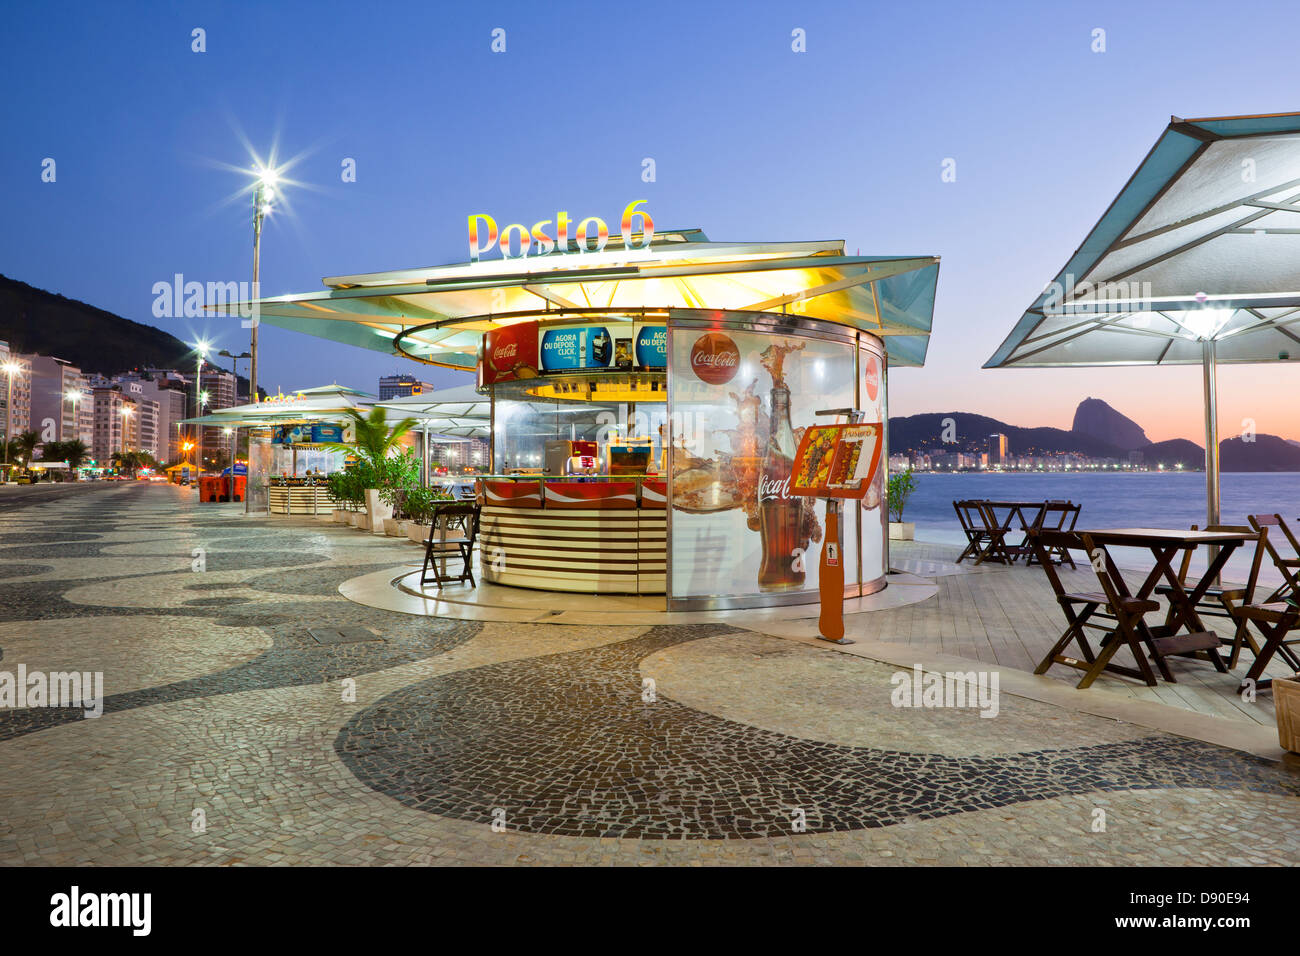 Stylized Kiosk named "Posto 6" with restaurant and bar at Copacabana beach sidewalk Rio de Janeiro Brazil Stock Photo